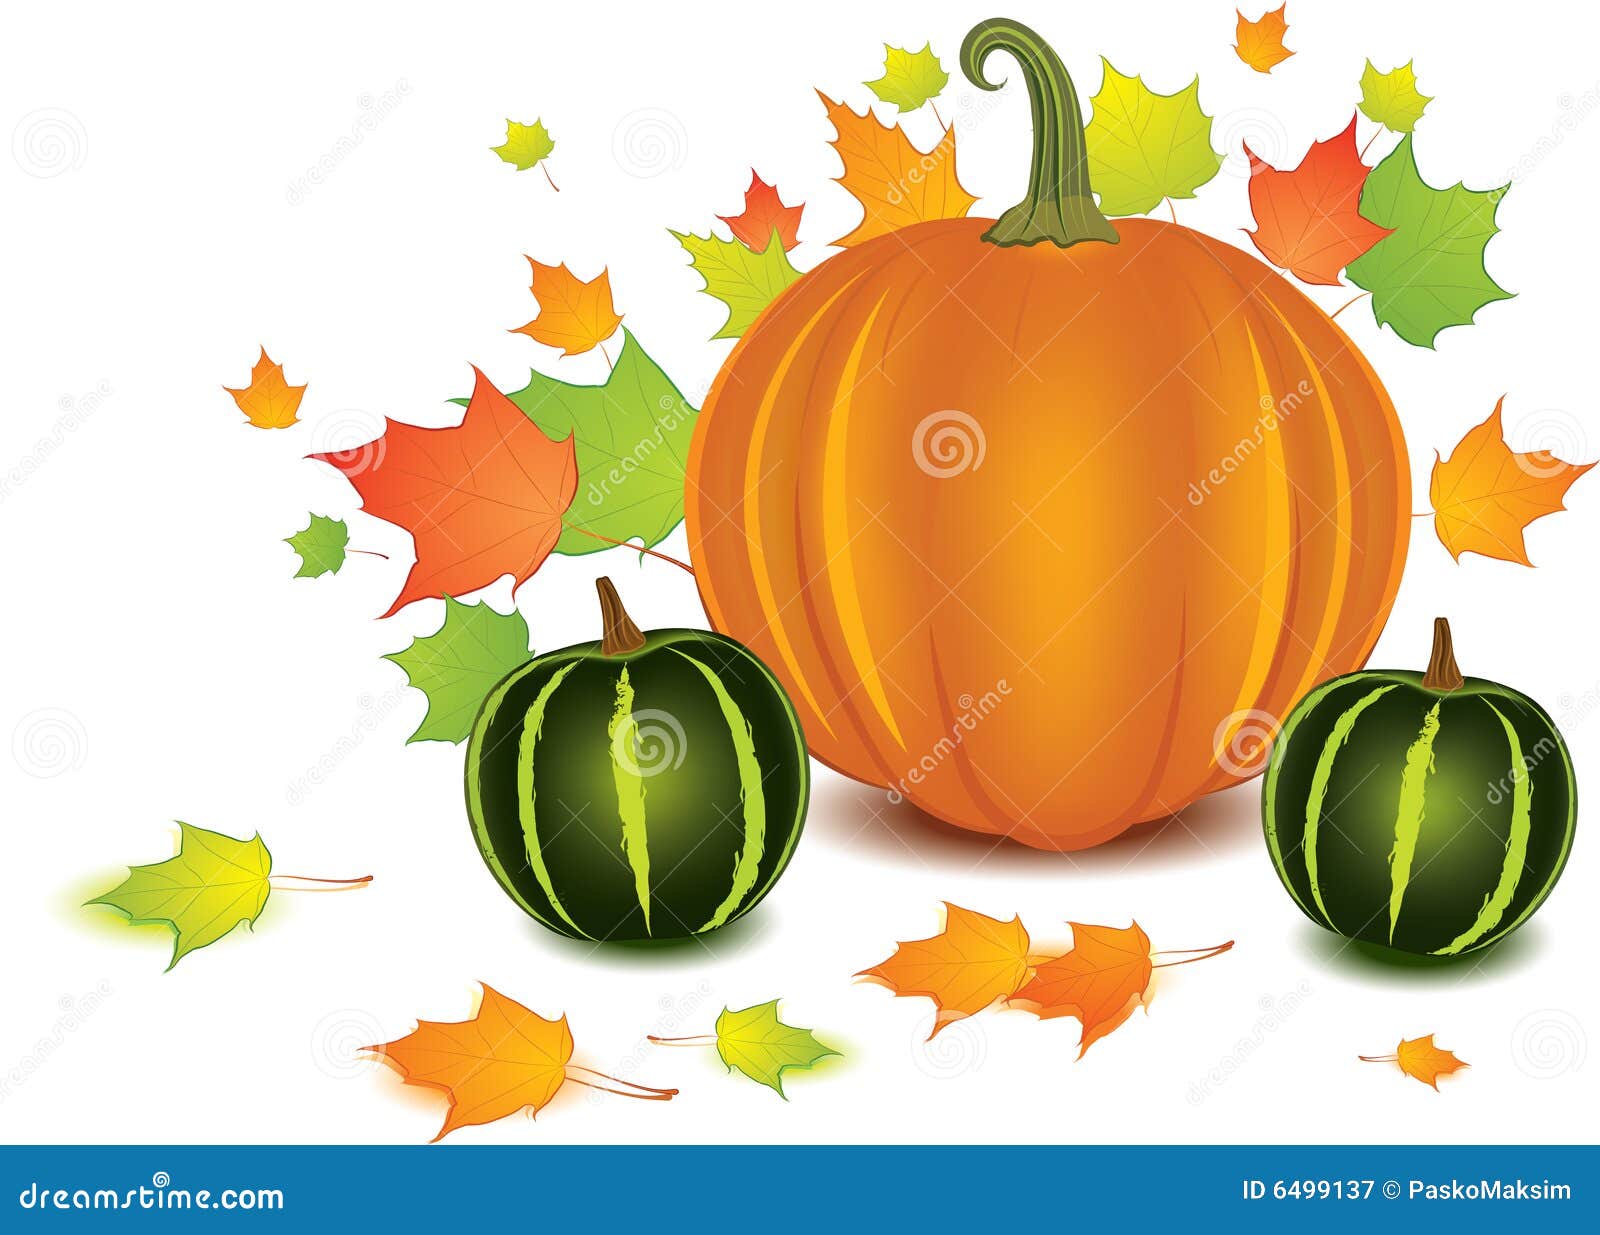 Pumpkin background stock vector. Illustration of fall - 6499137